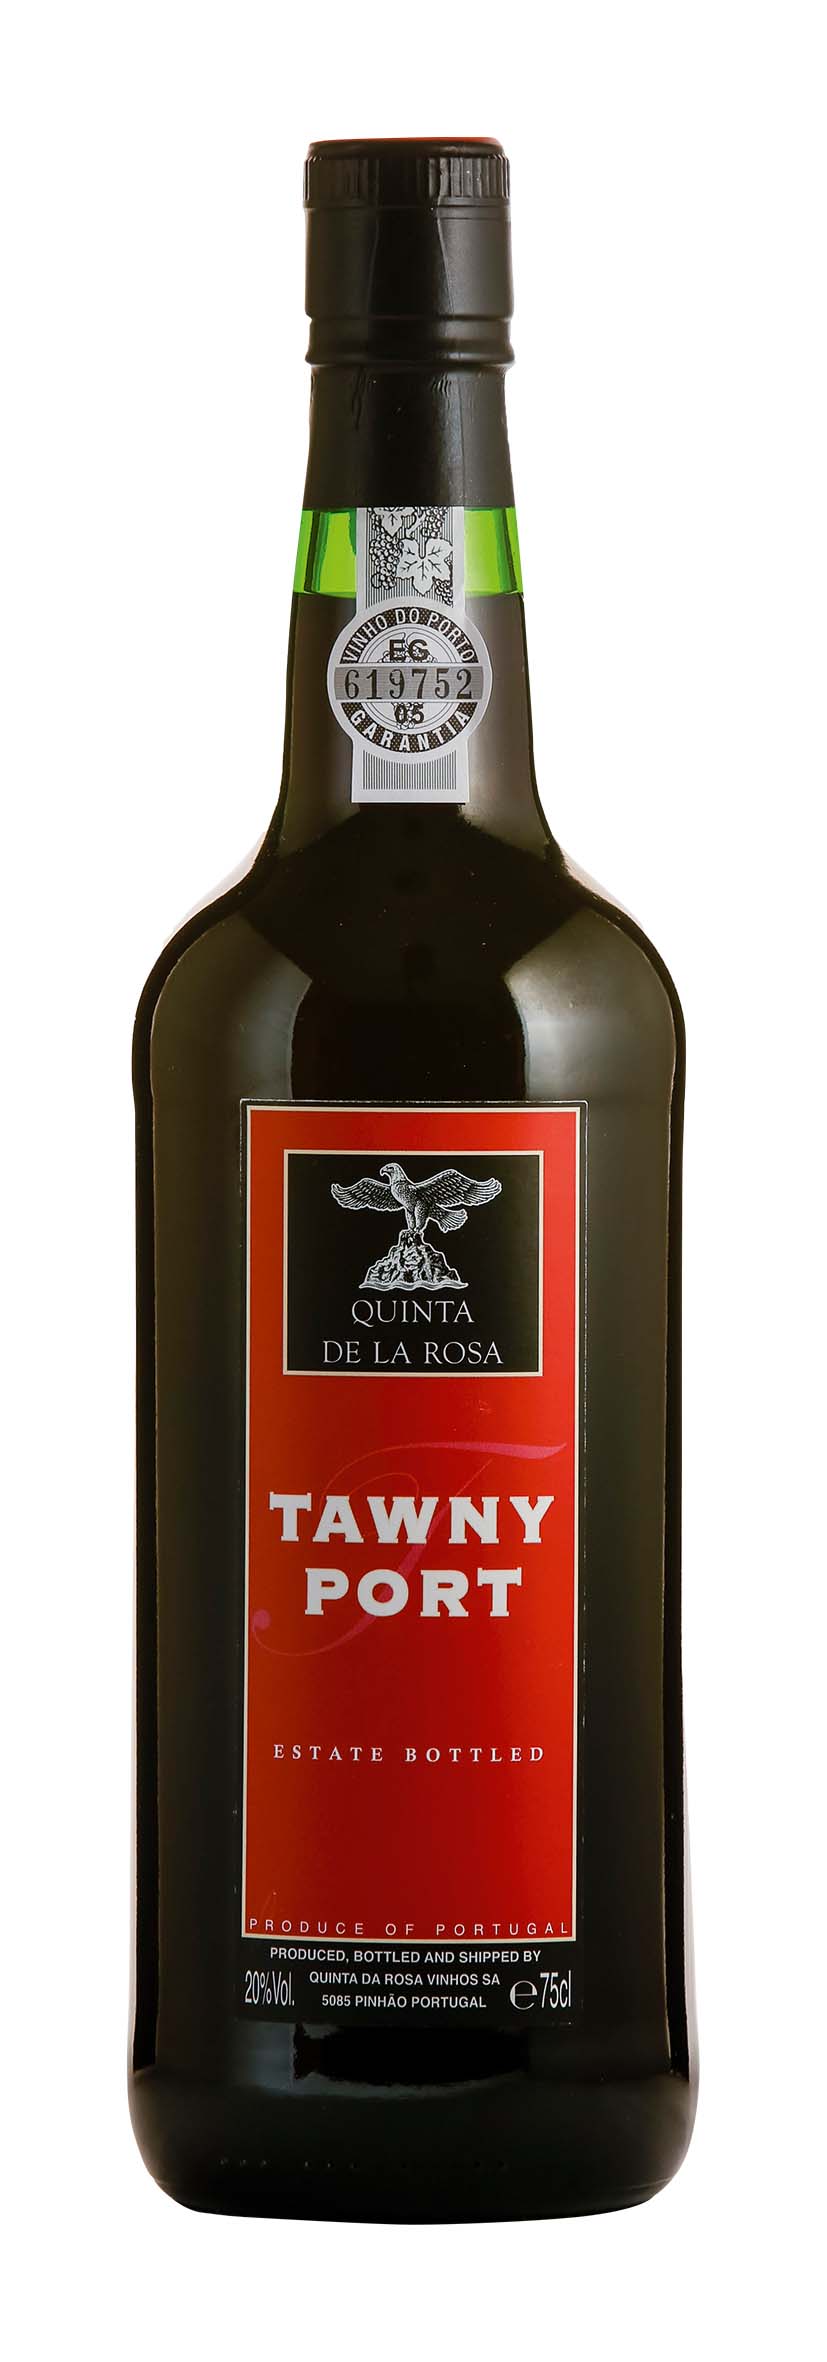 Douro Tawny 0